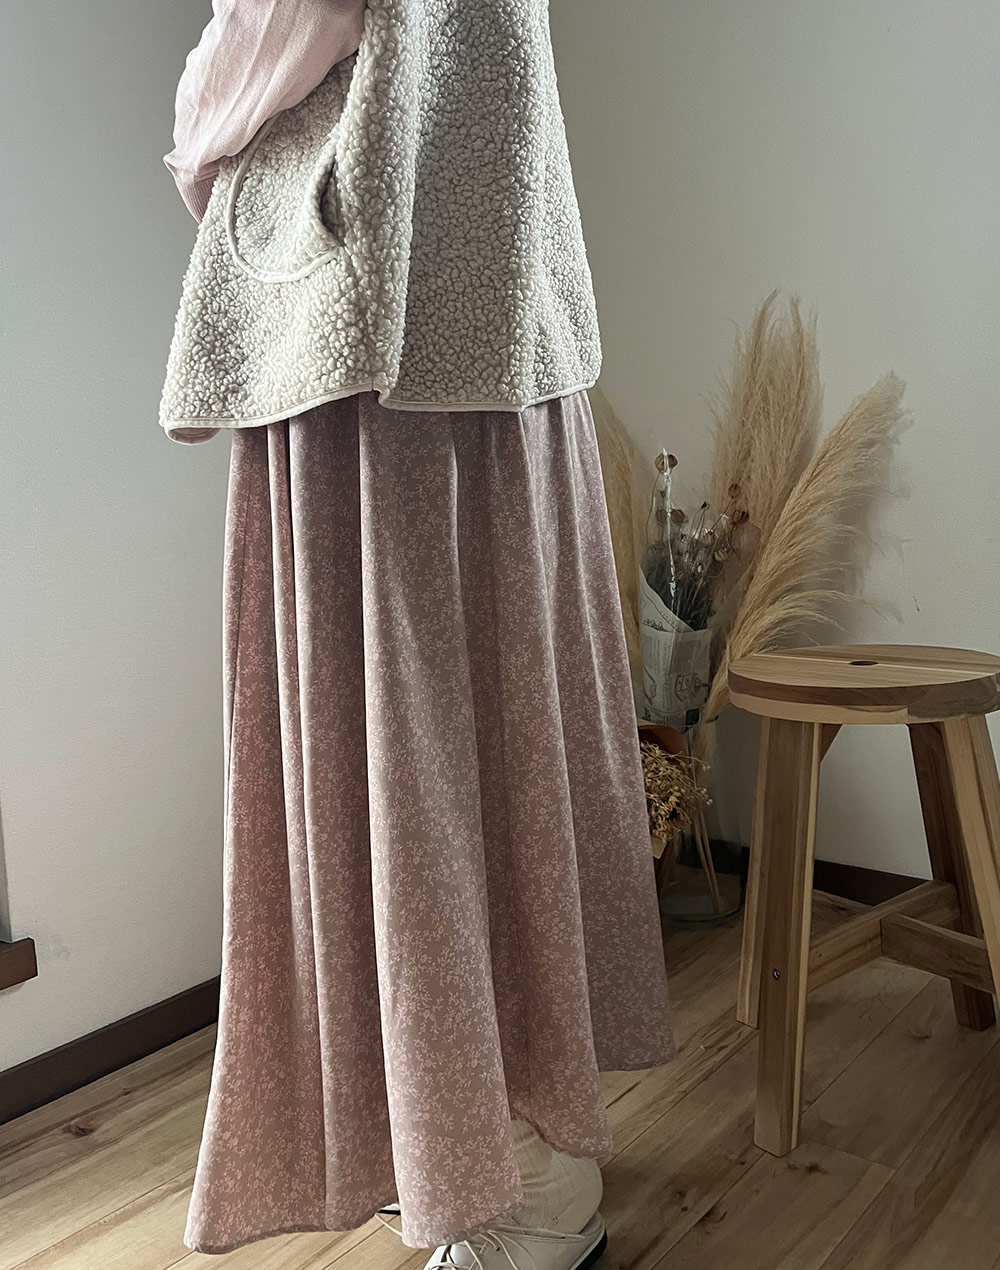 Flower skirt・t277739（スカート/スカート）| rirry_71 | 東京ガールズマーケット